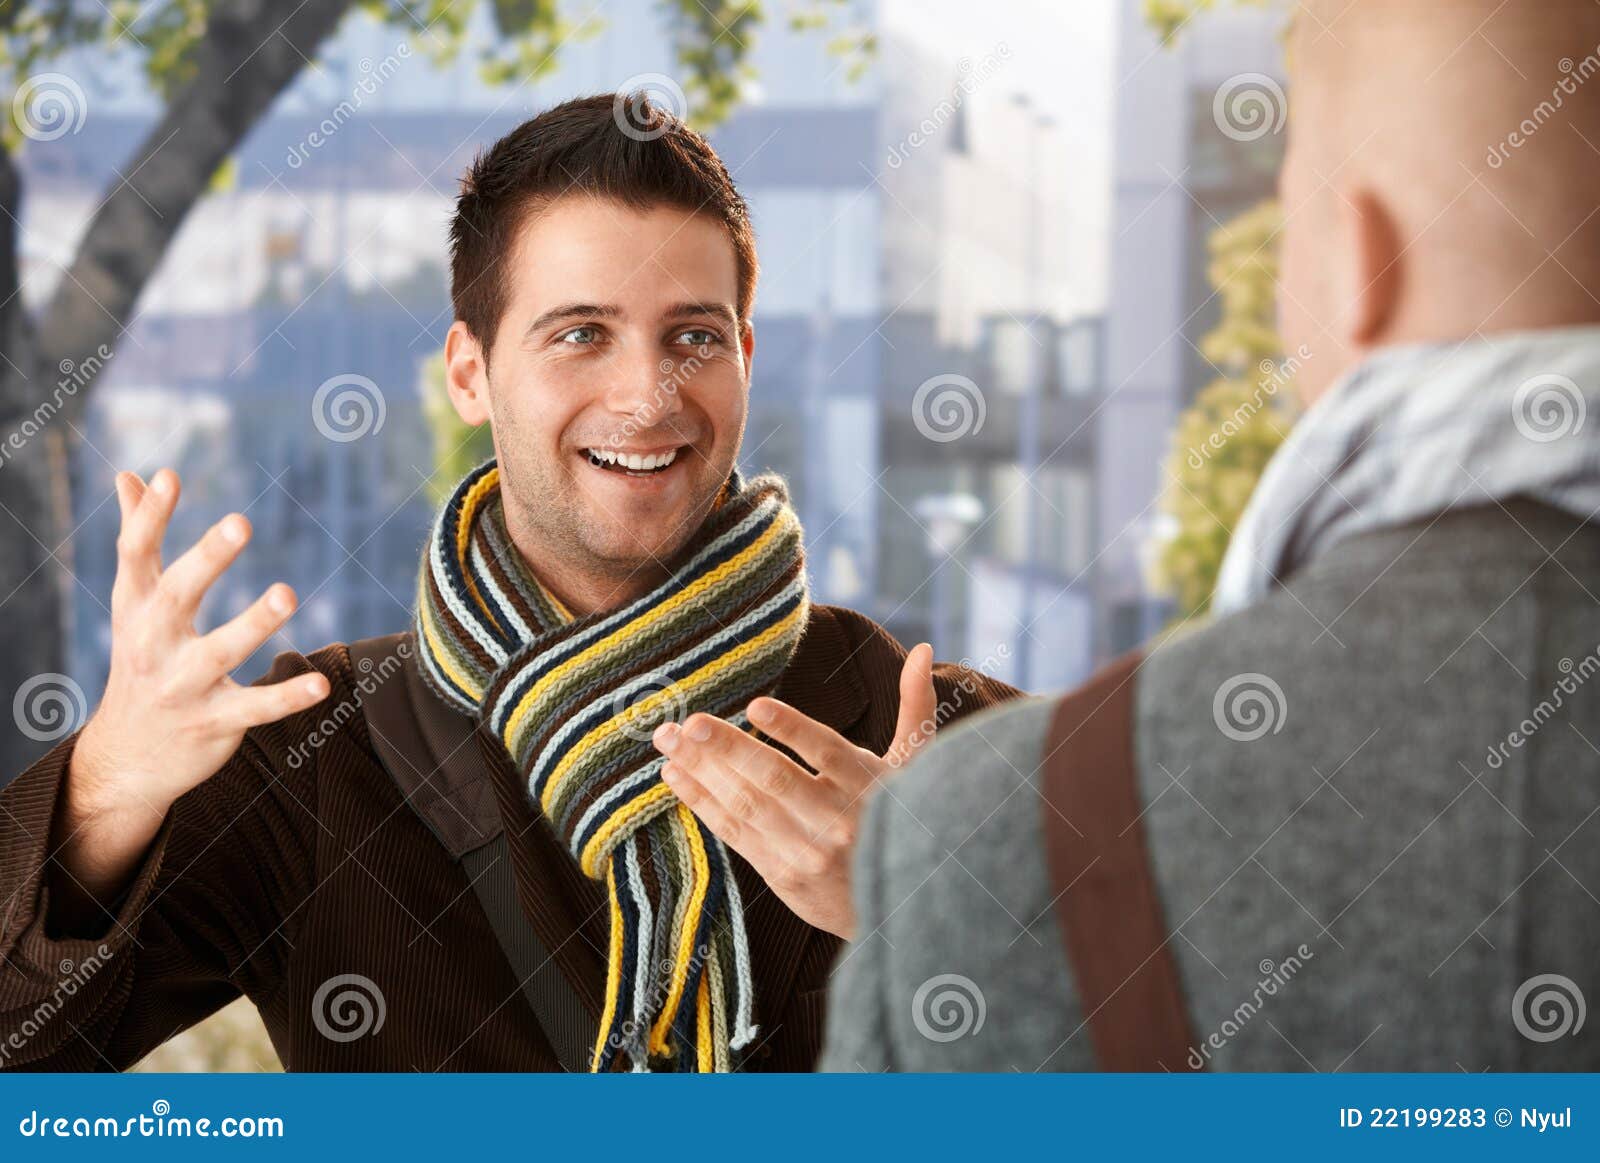 cheerful guy gesturing to friend